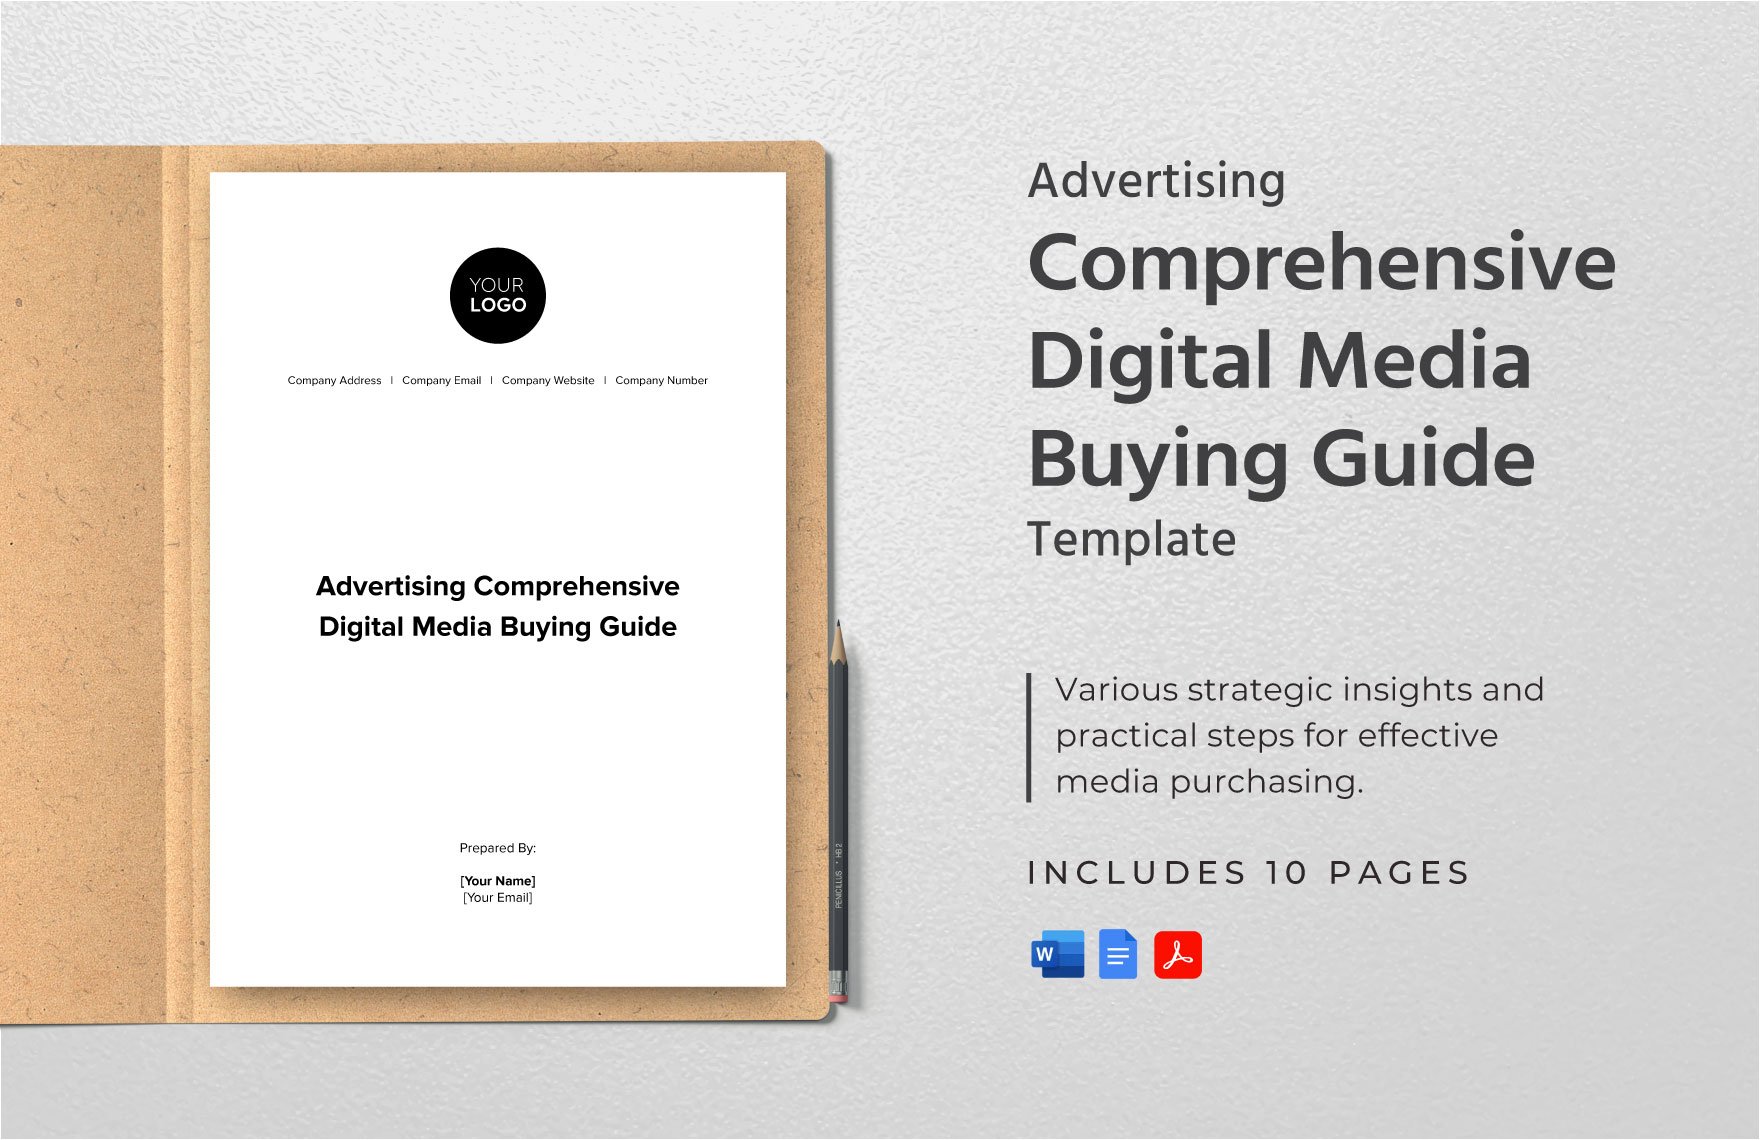 Advertising Comprehensive Digital Media Buying Guide Template in Word, Google Docs, PDF